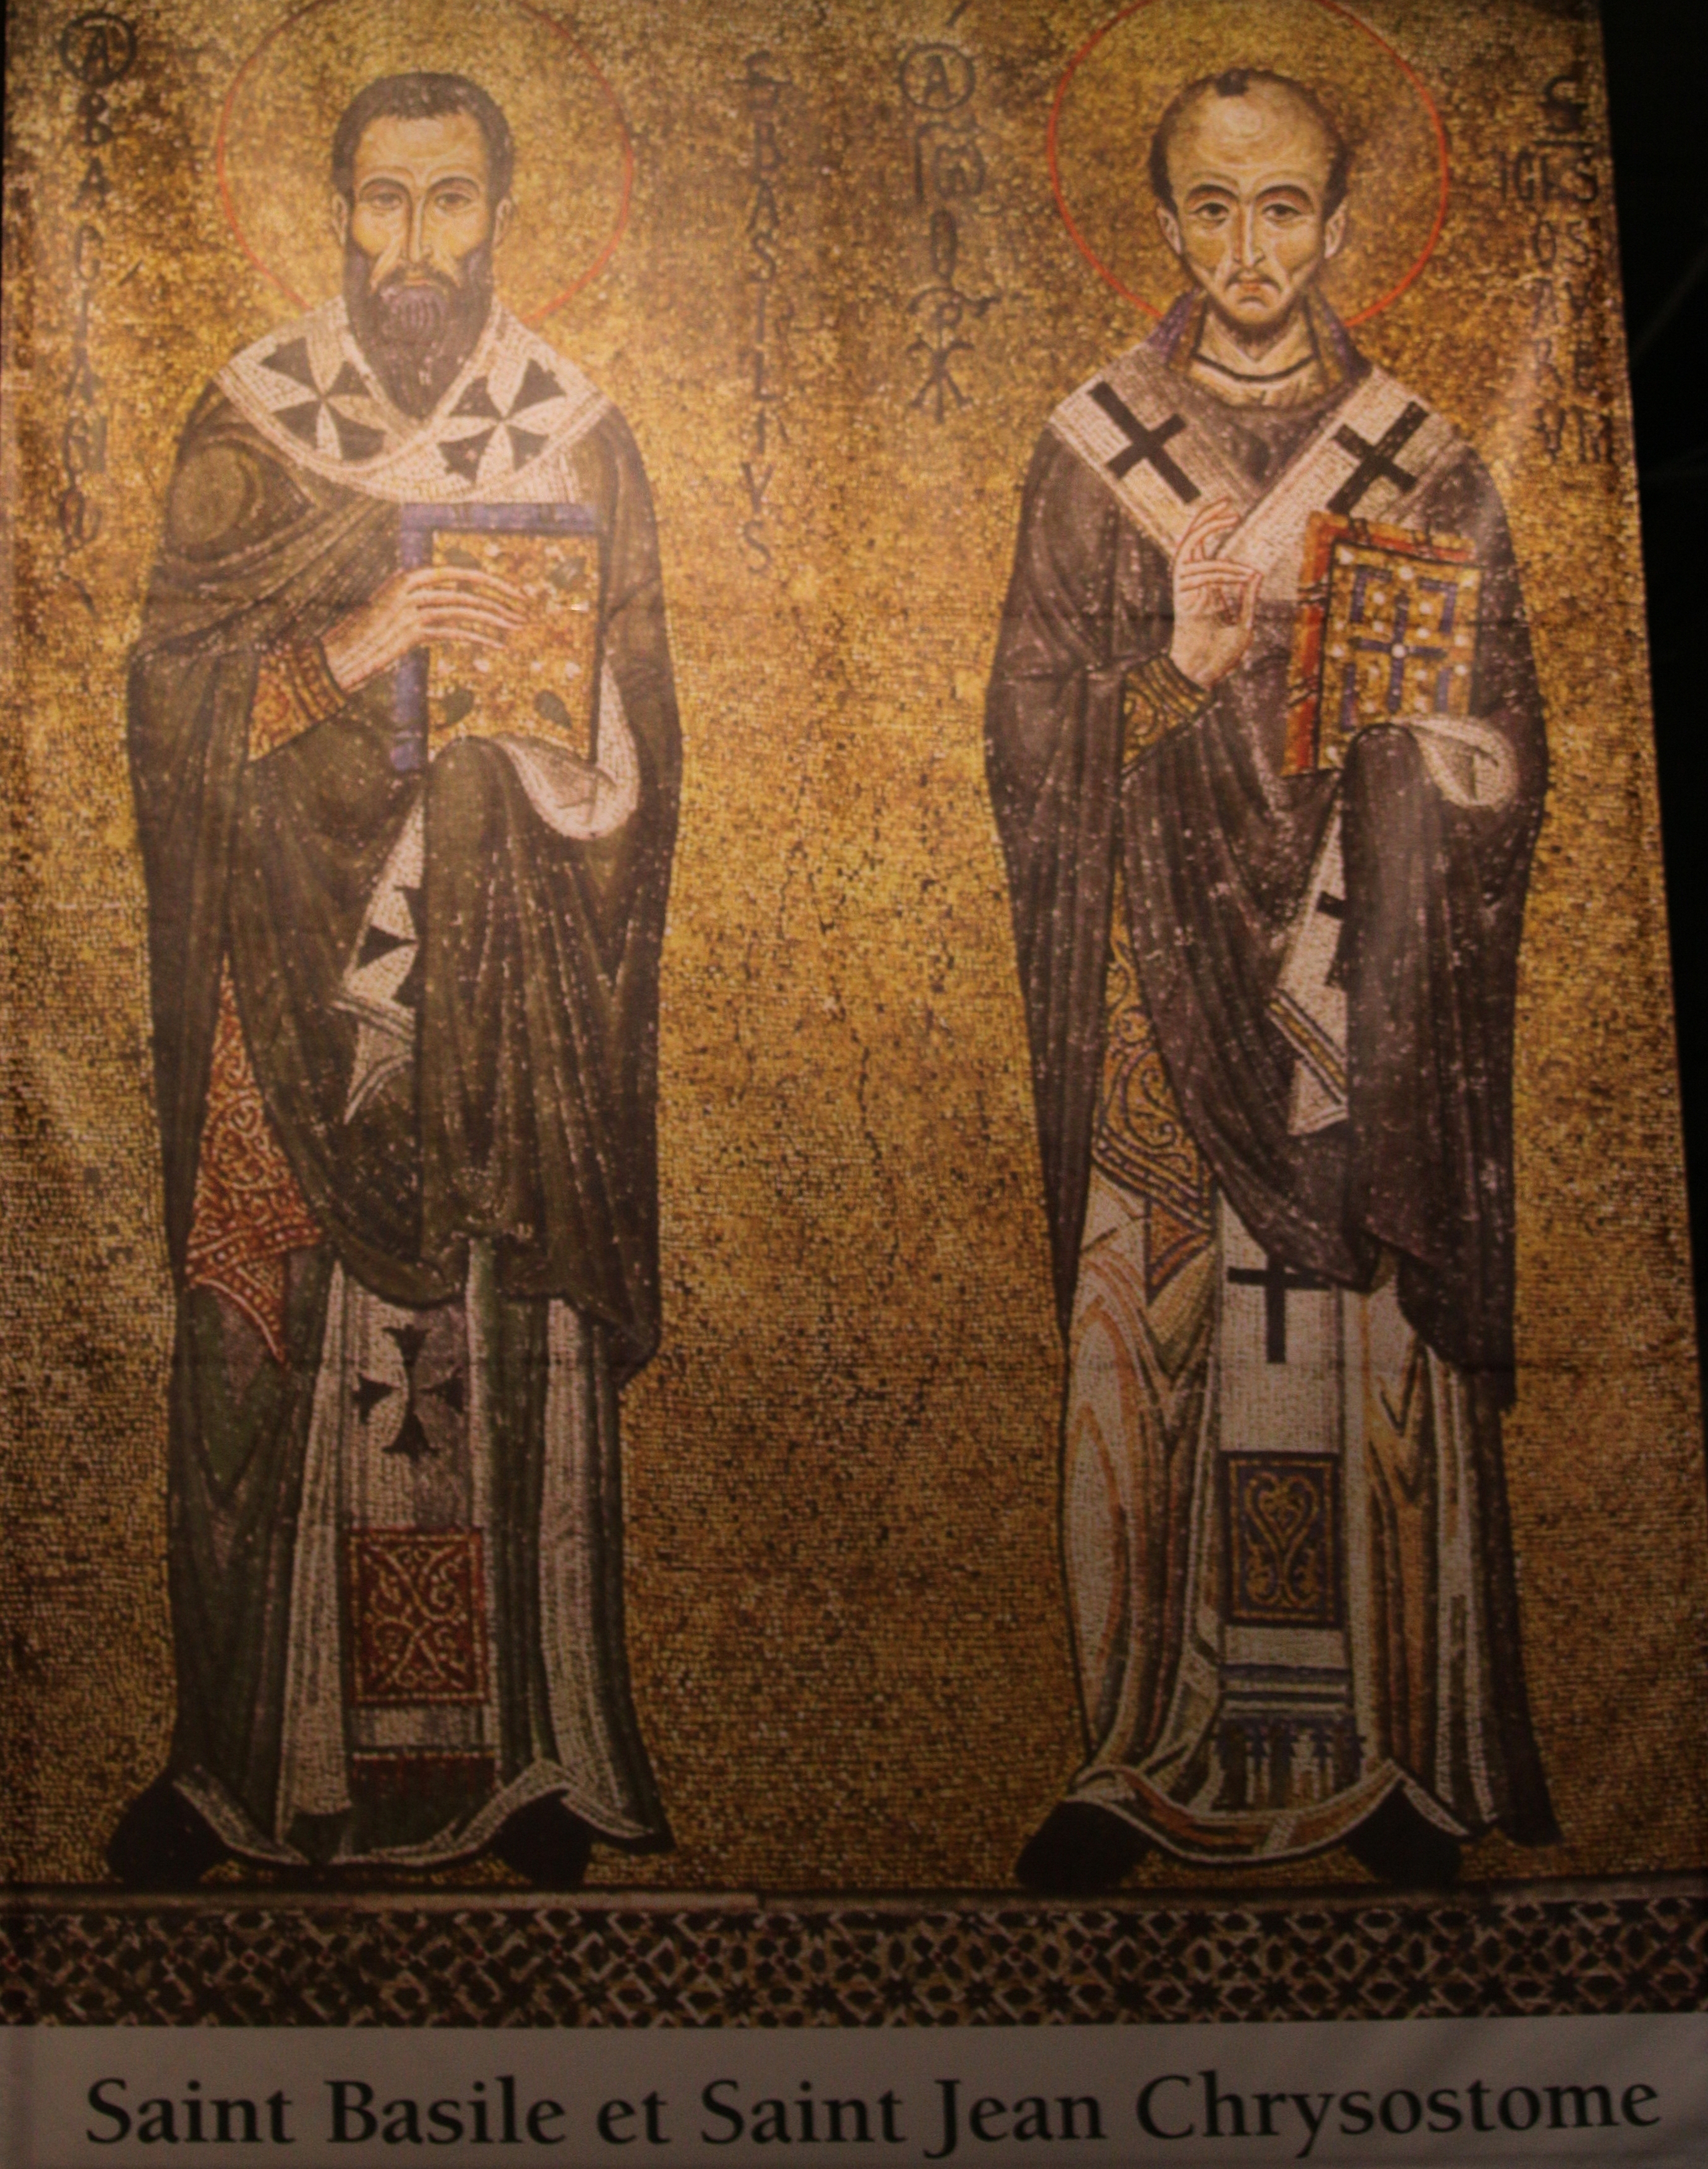 saint Basil and saint John Chrysostom (saint Basile and saint Jean Chrysostome). All Christians in heaven are considered to be saints.